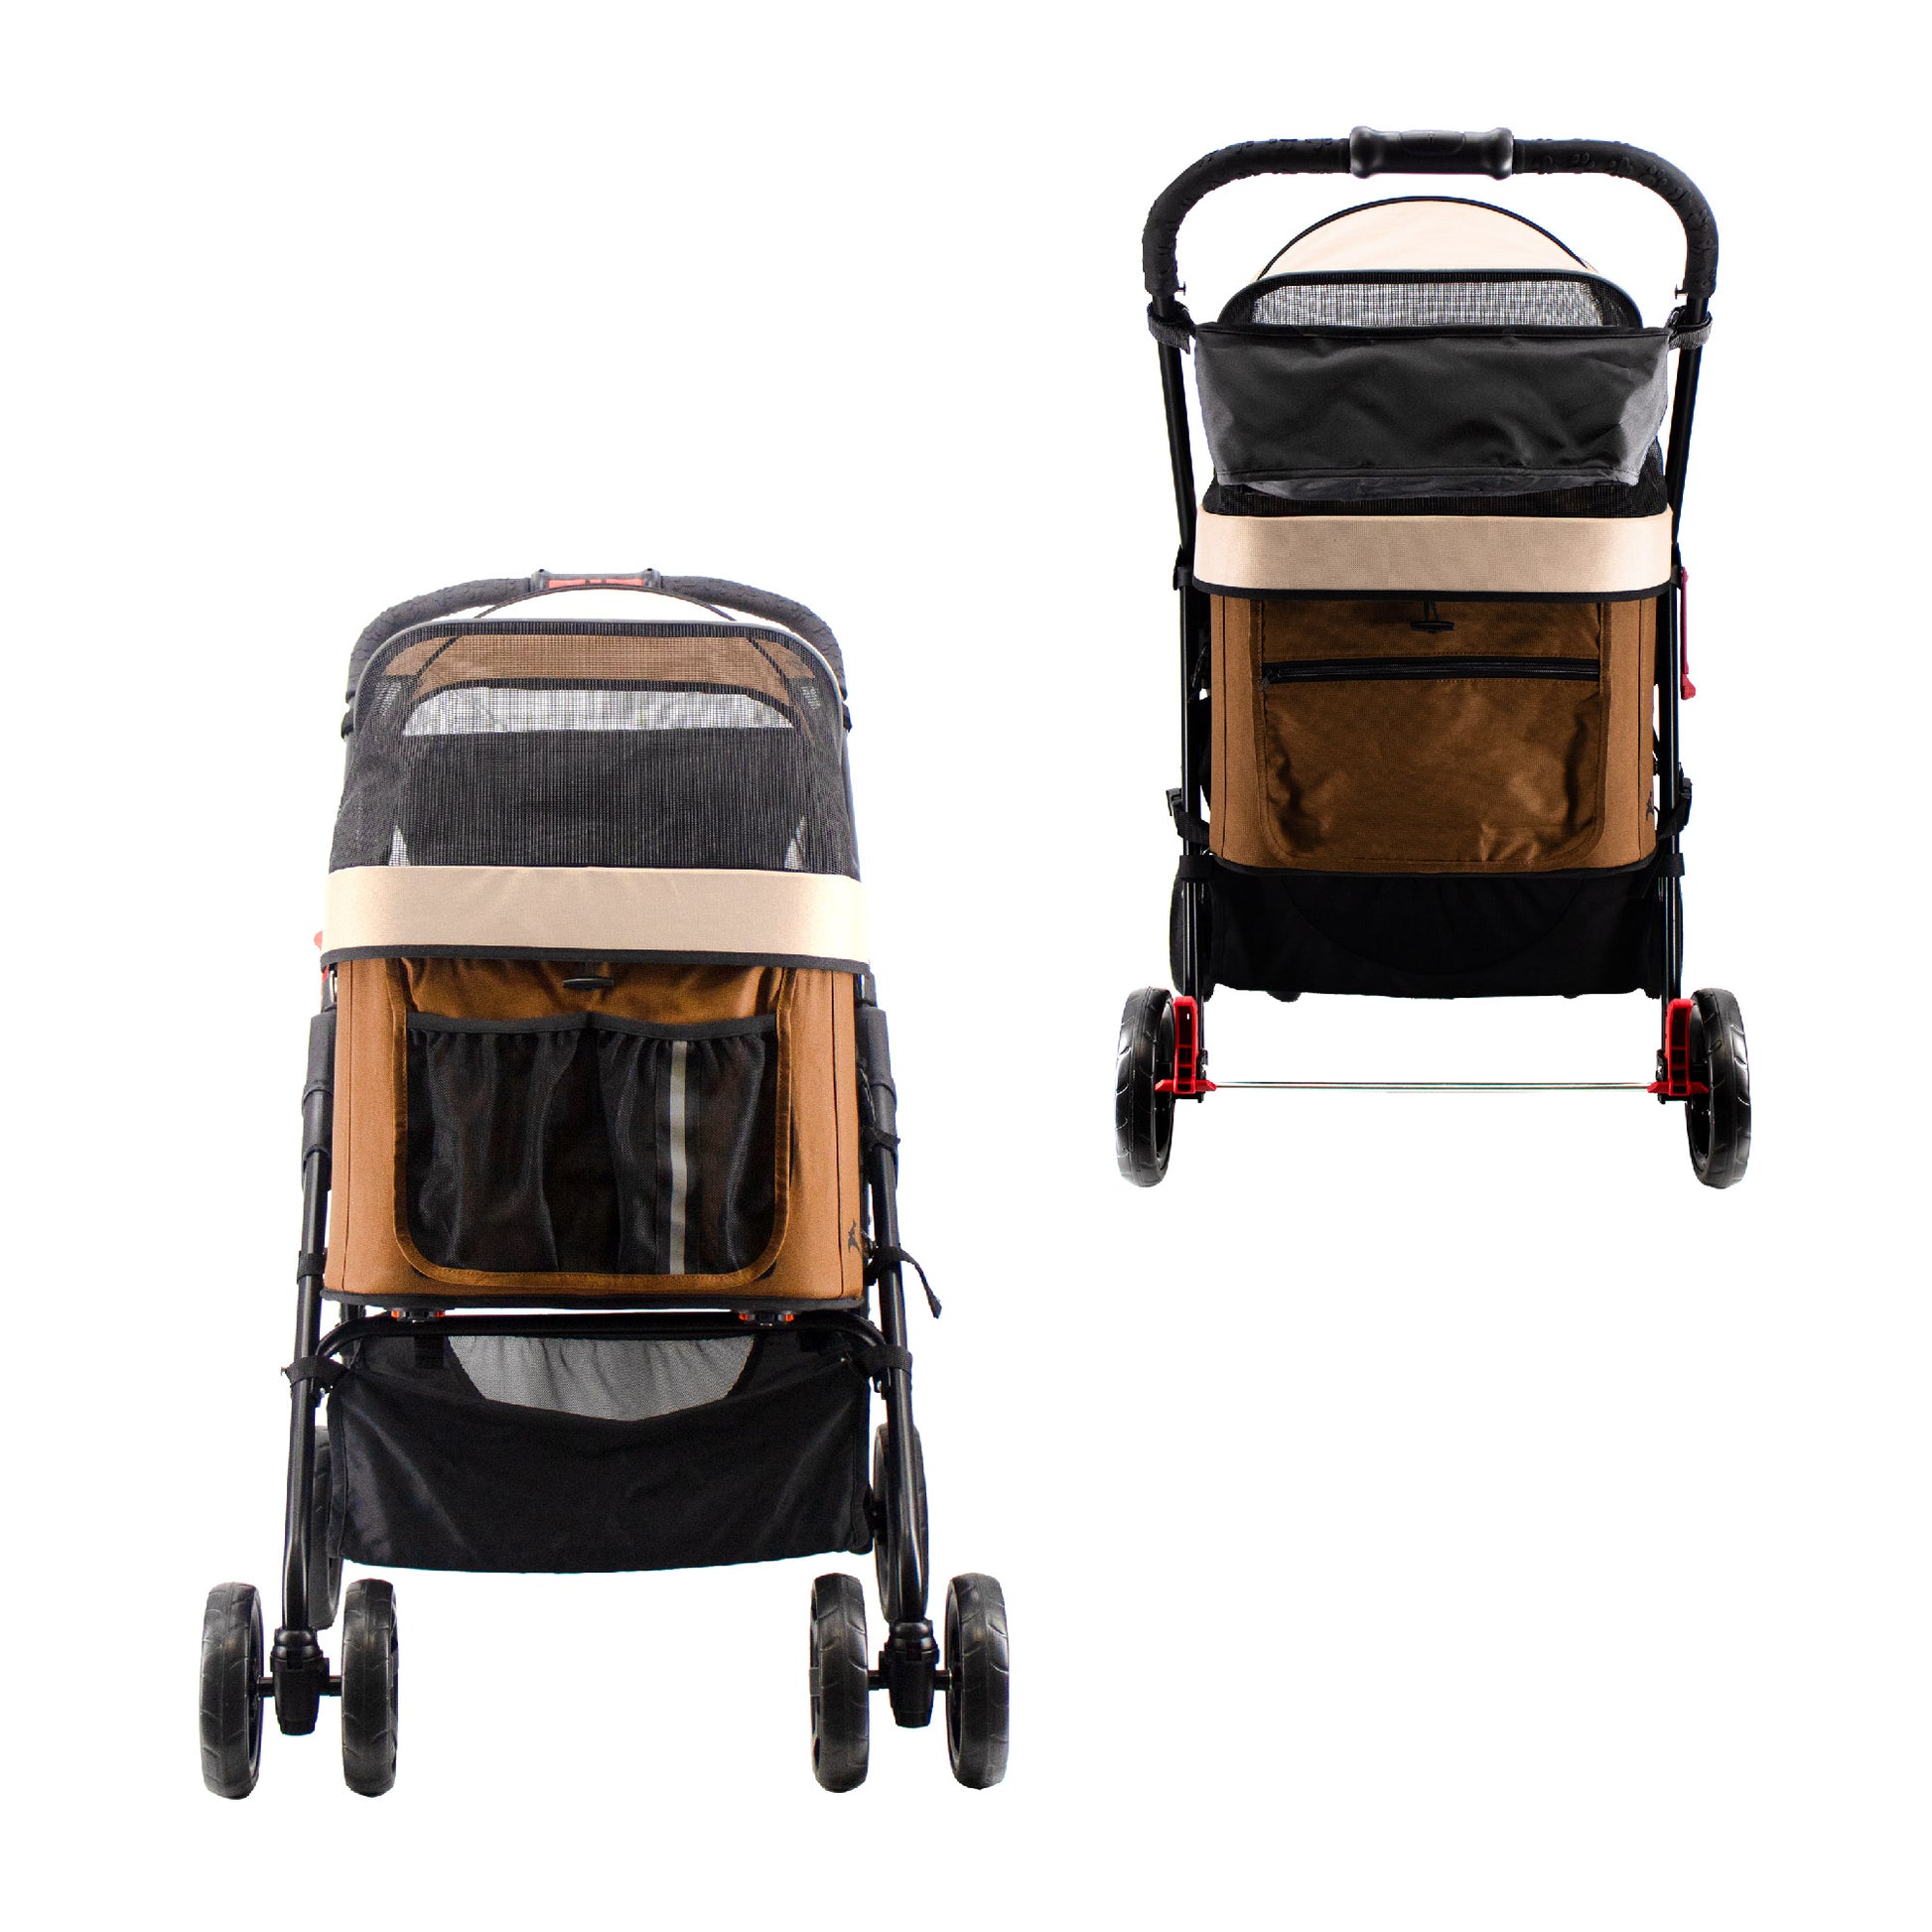 brown pet stroller